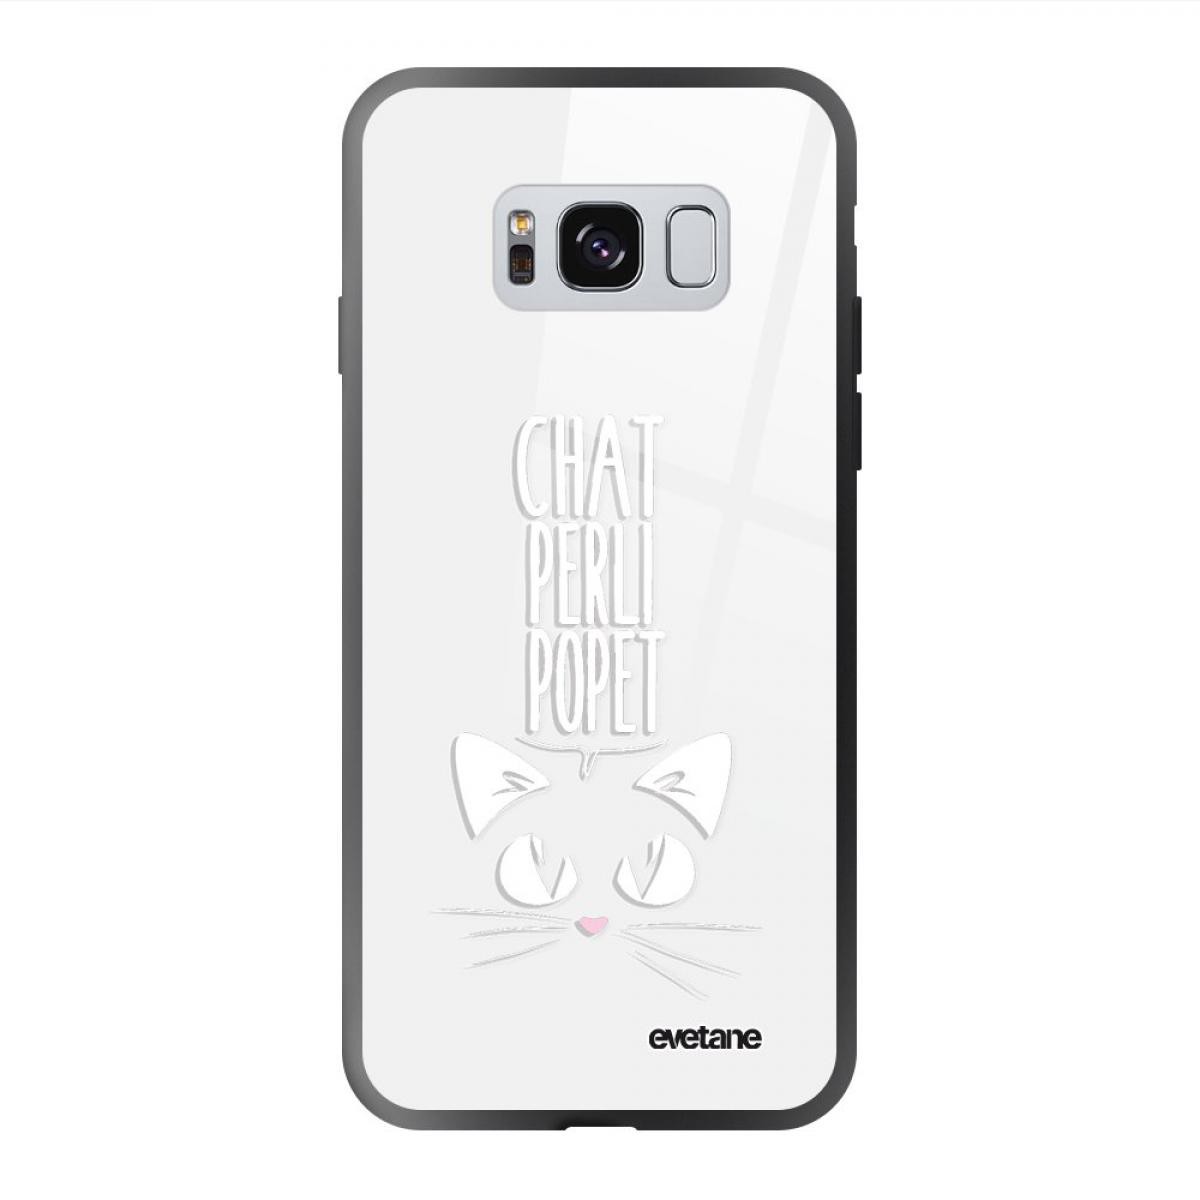 Evetane - Coque Galaxy S8 soft touch noir effet glossy Chat Perli Popet Design Evetane - Coque, étui smartphone